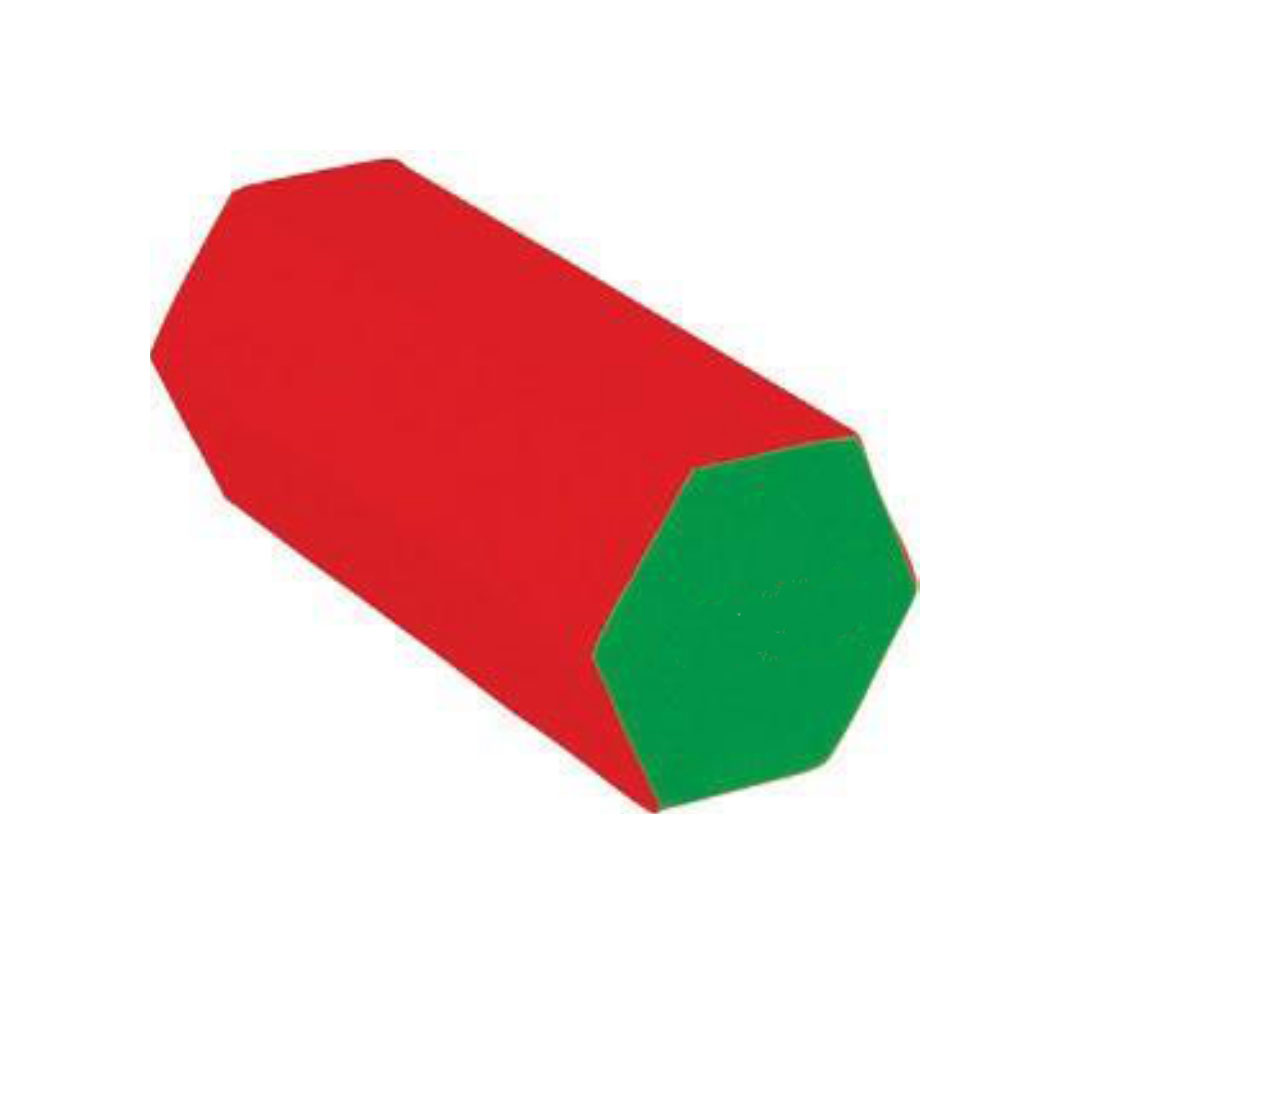 Hexagonal Cylinder